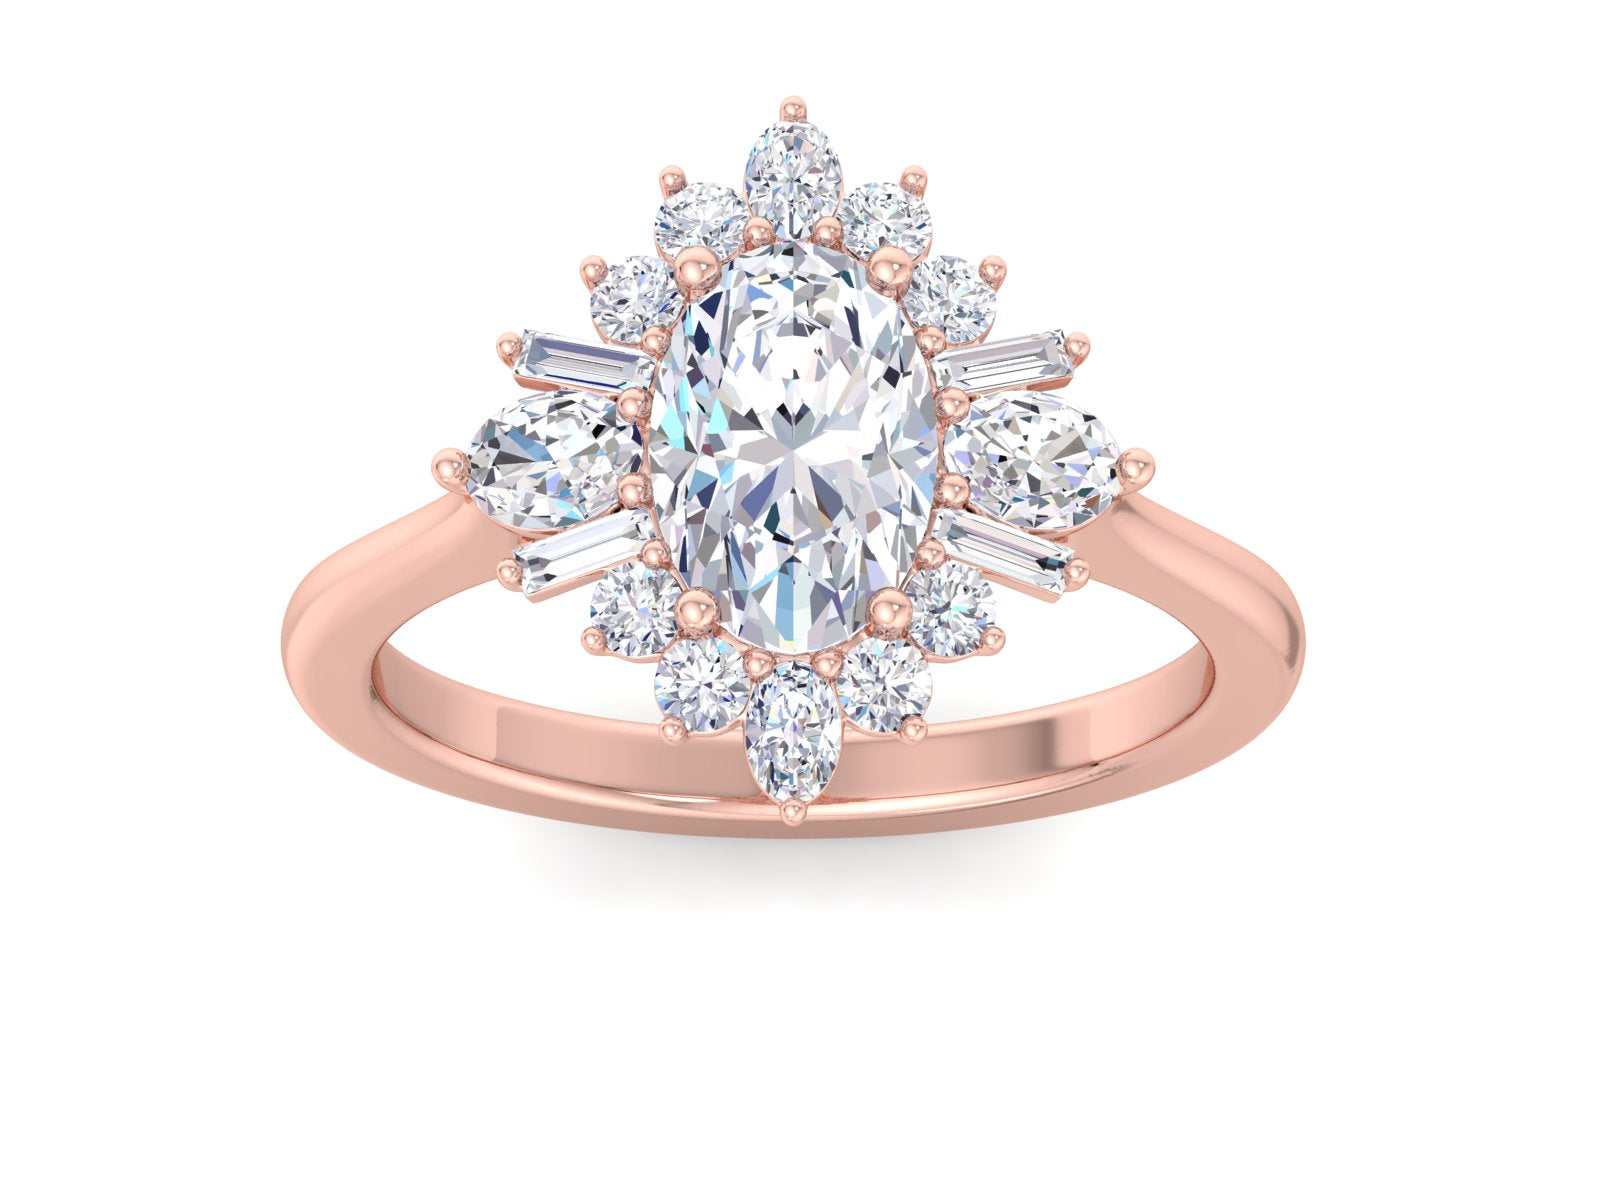 Oval Starburst Engagement Ring/ Floral Cluster Wedding Ring